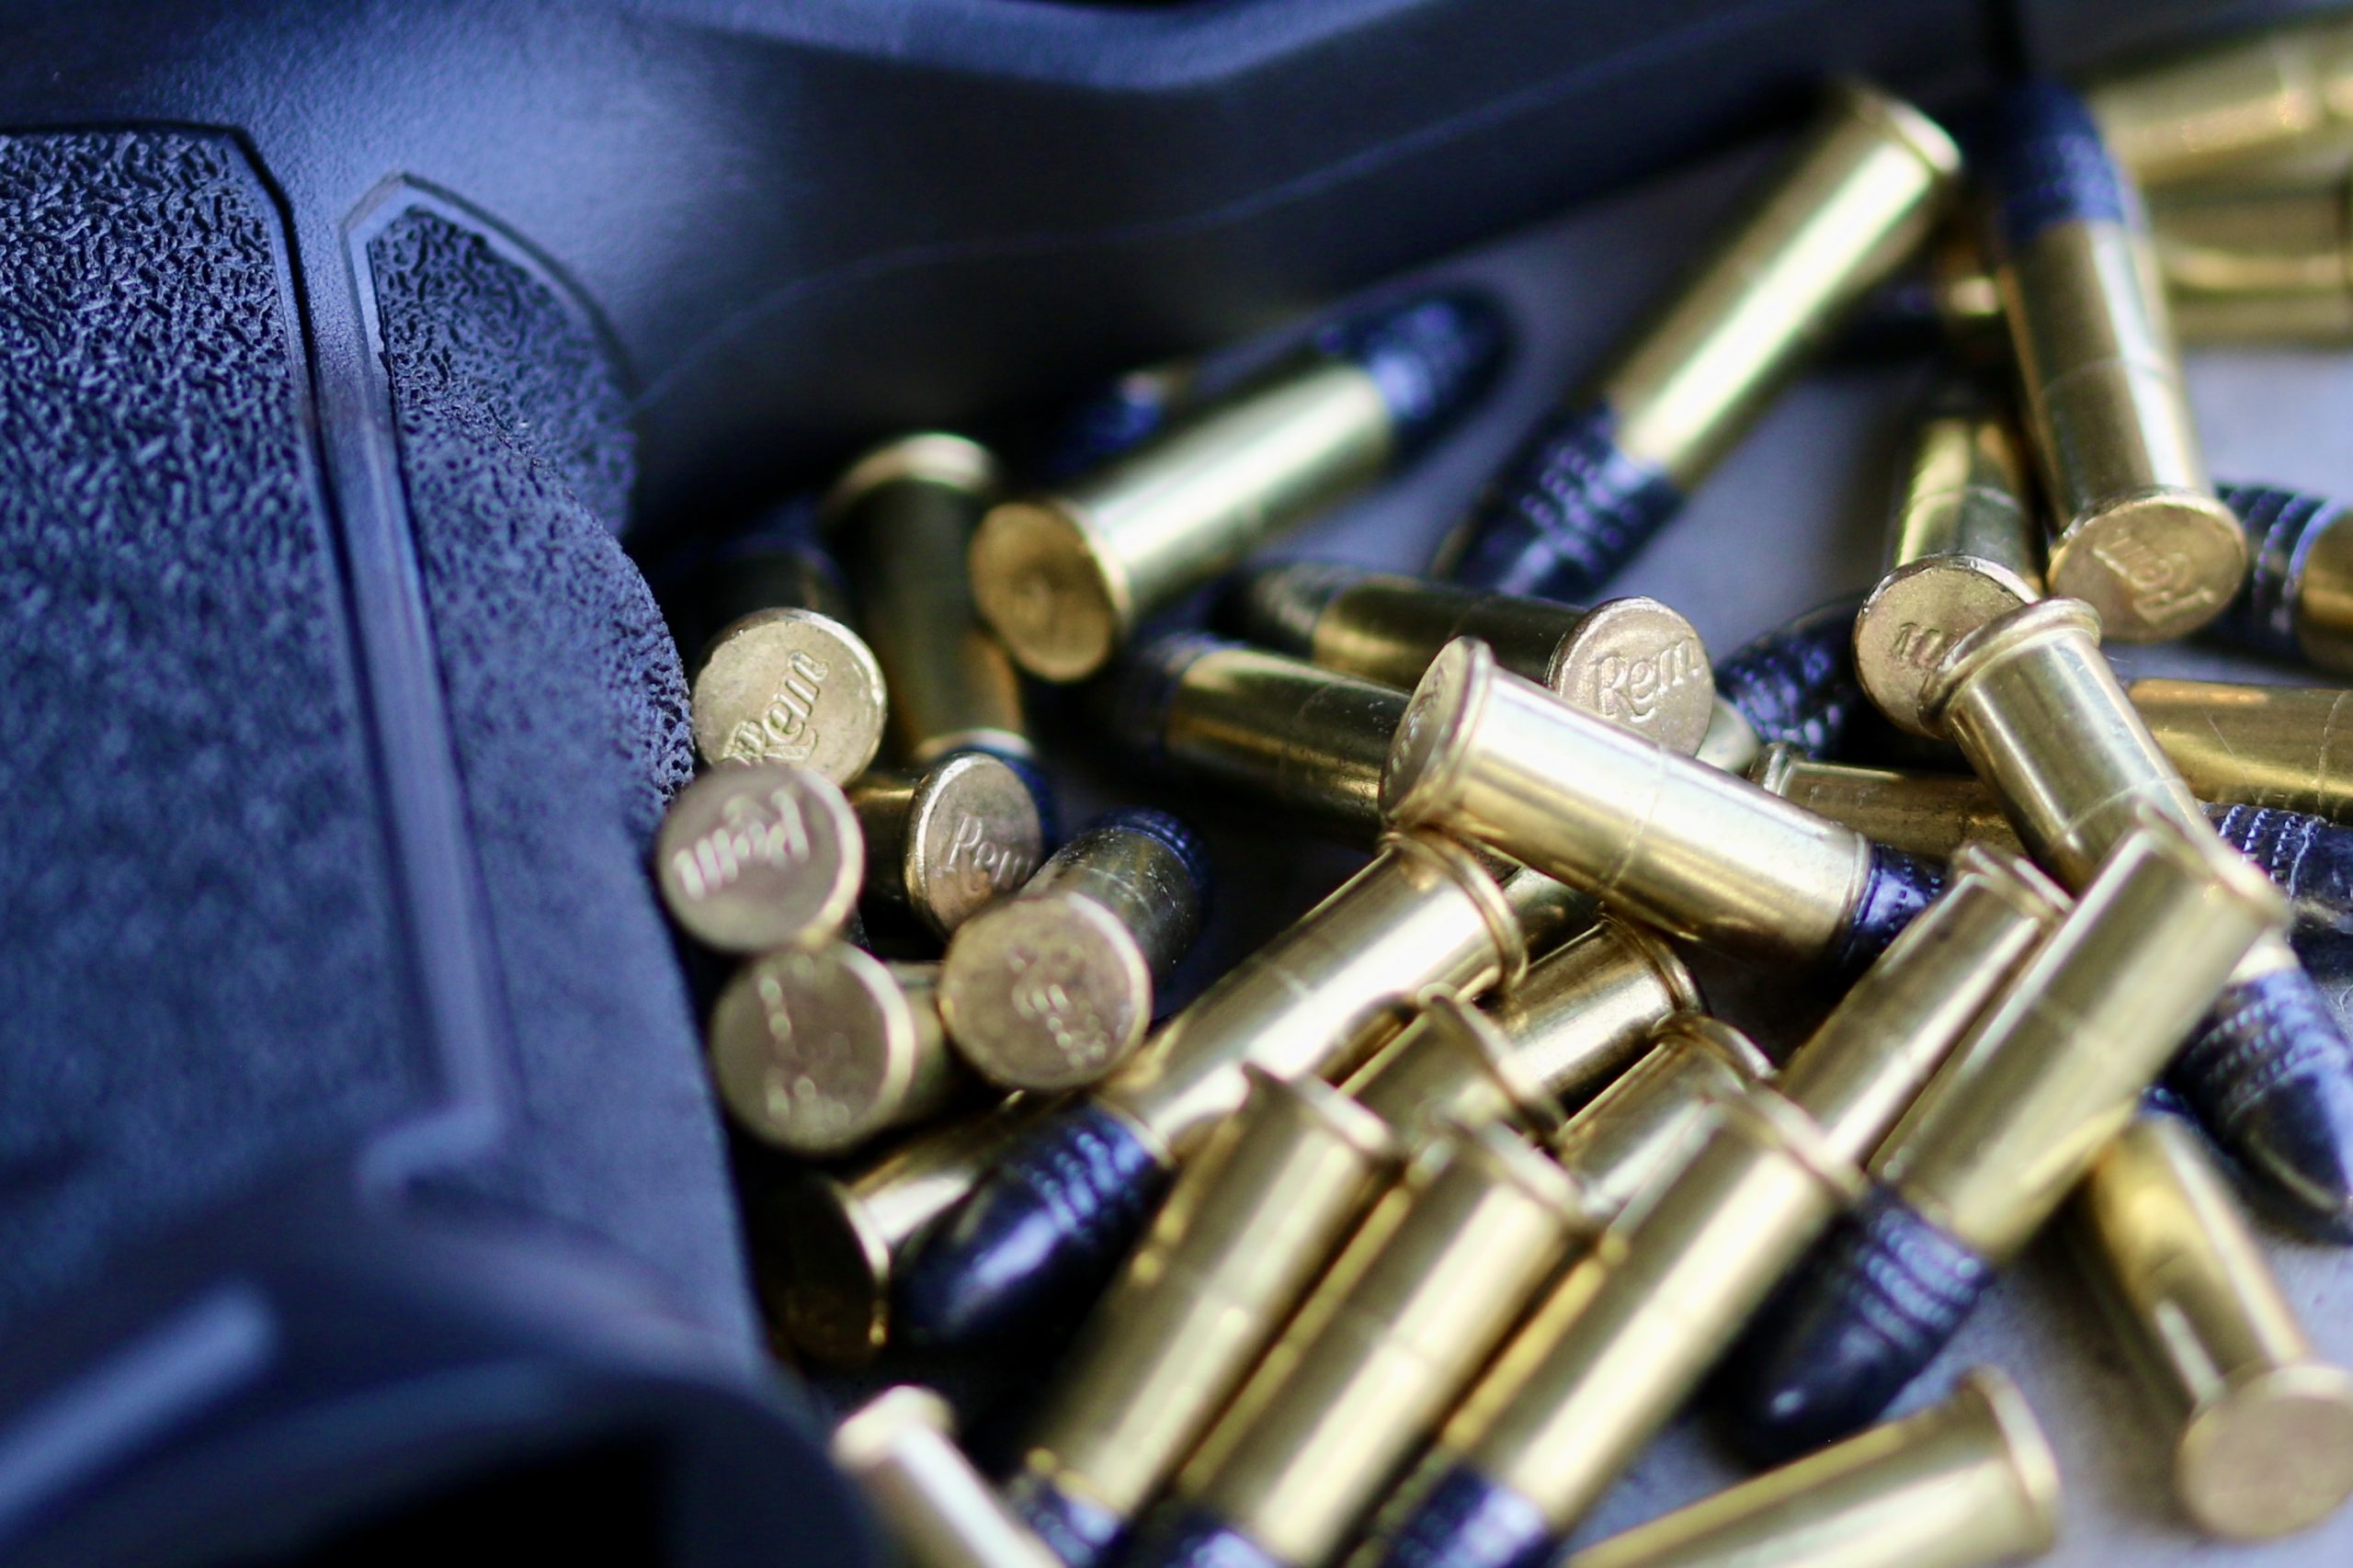 Remington .22 Thunderbolt cartridges piled next to Taurus TX22 